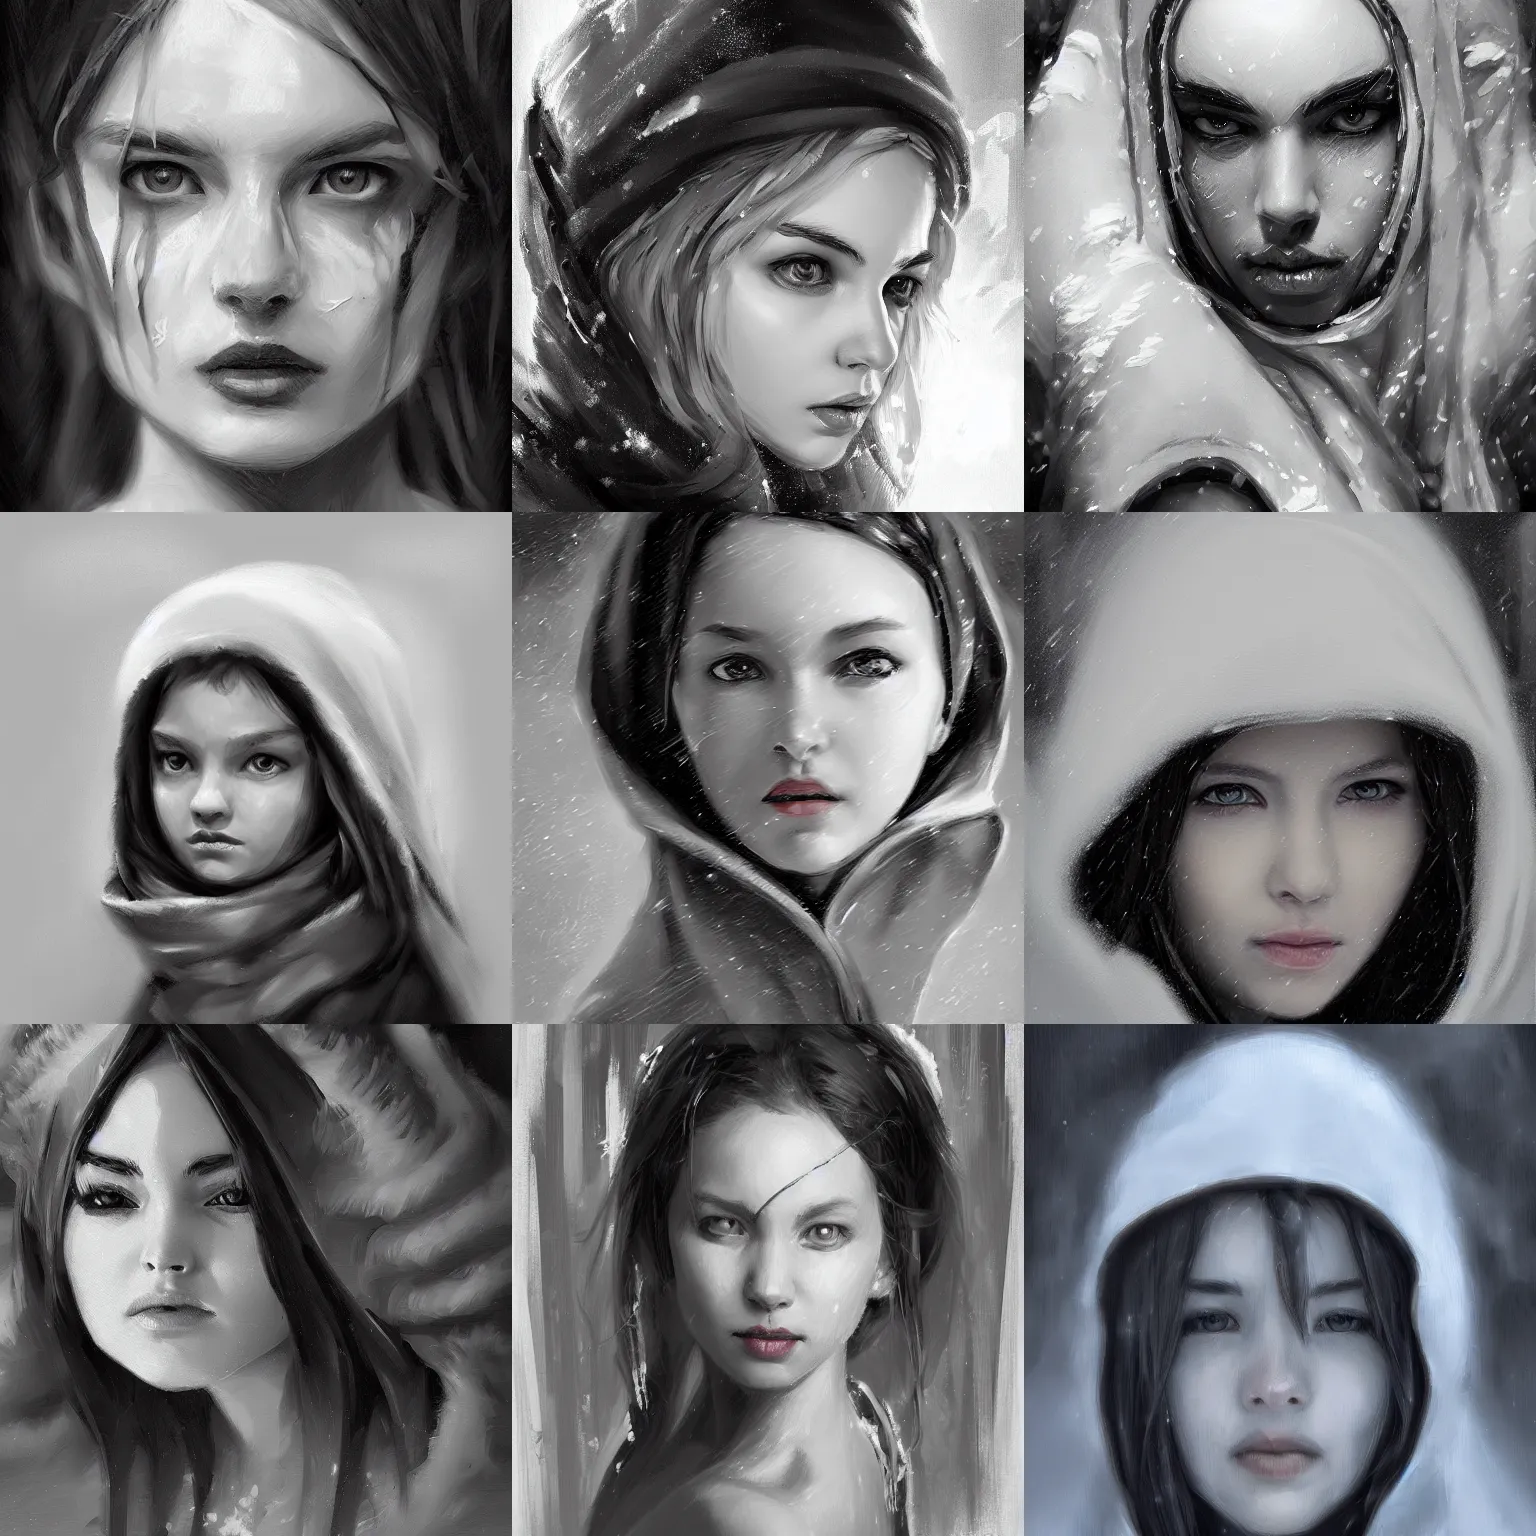 Prompt: snow, concept art oil painting, black and white portrait fantasy by jama jurabaev, extremely detailed, brush hard, artstation